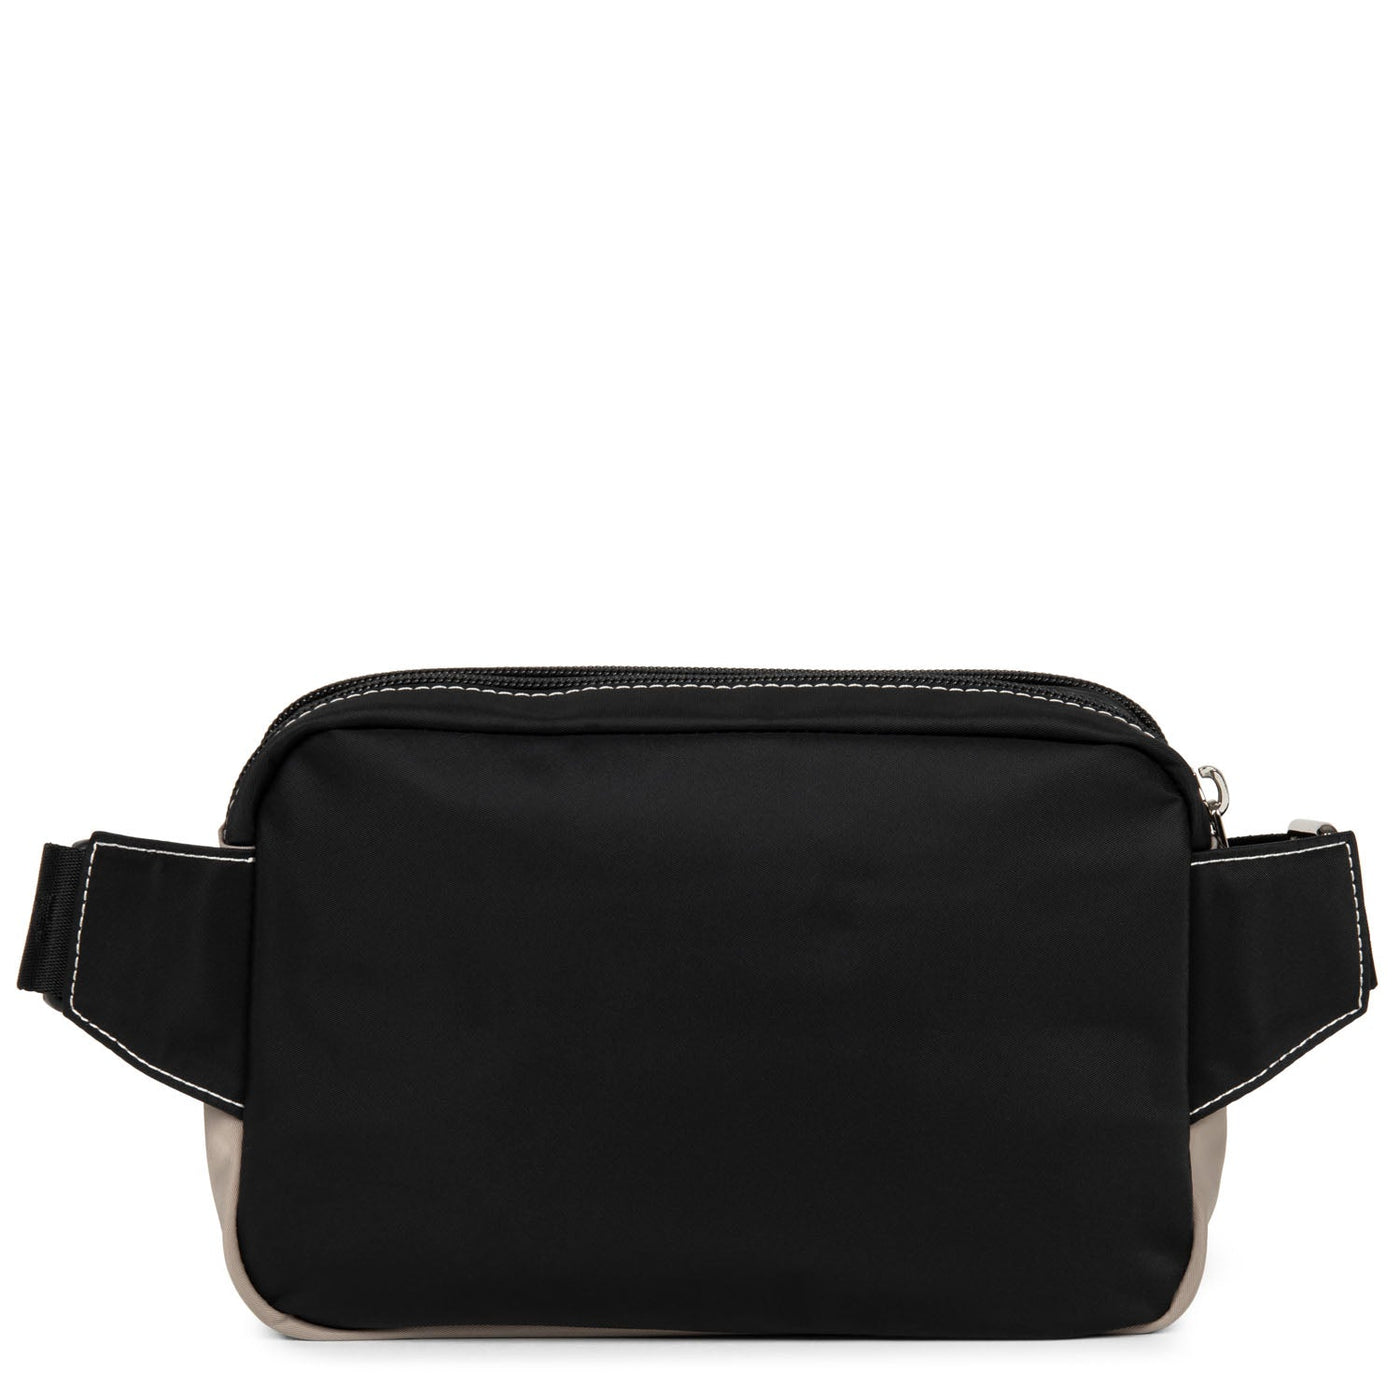 belt bag - basic sport #couleur_noir-galet